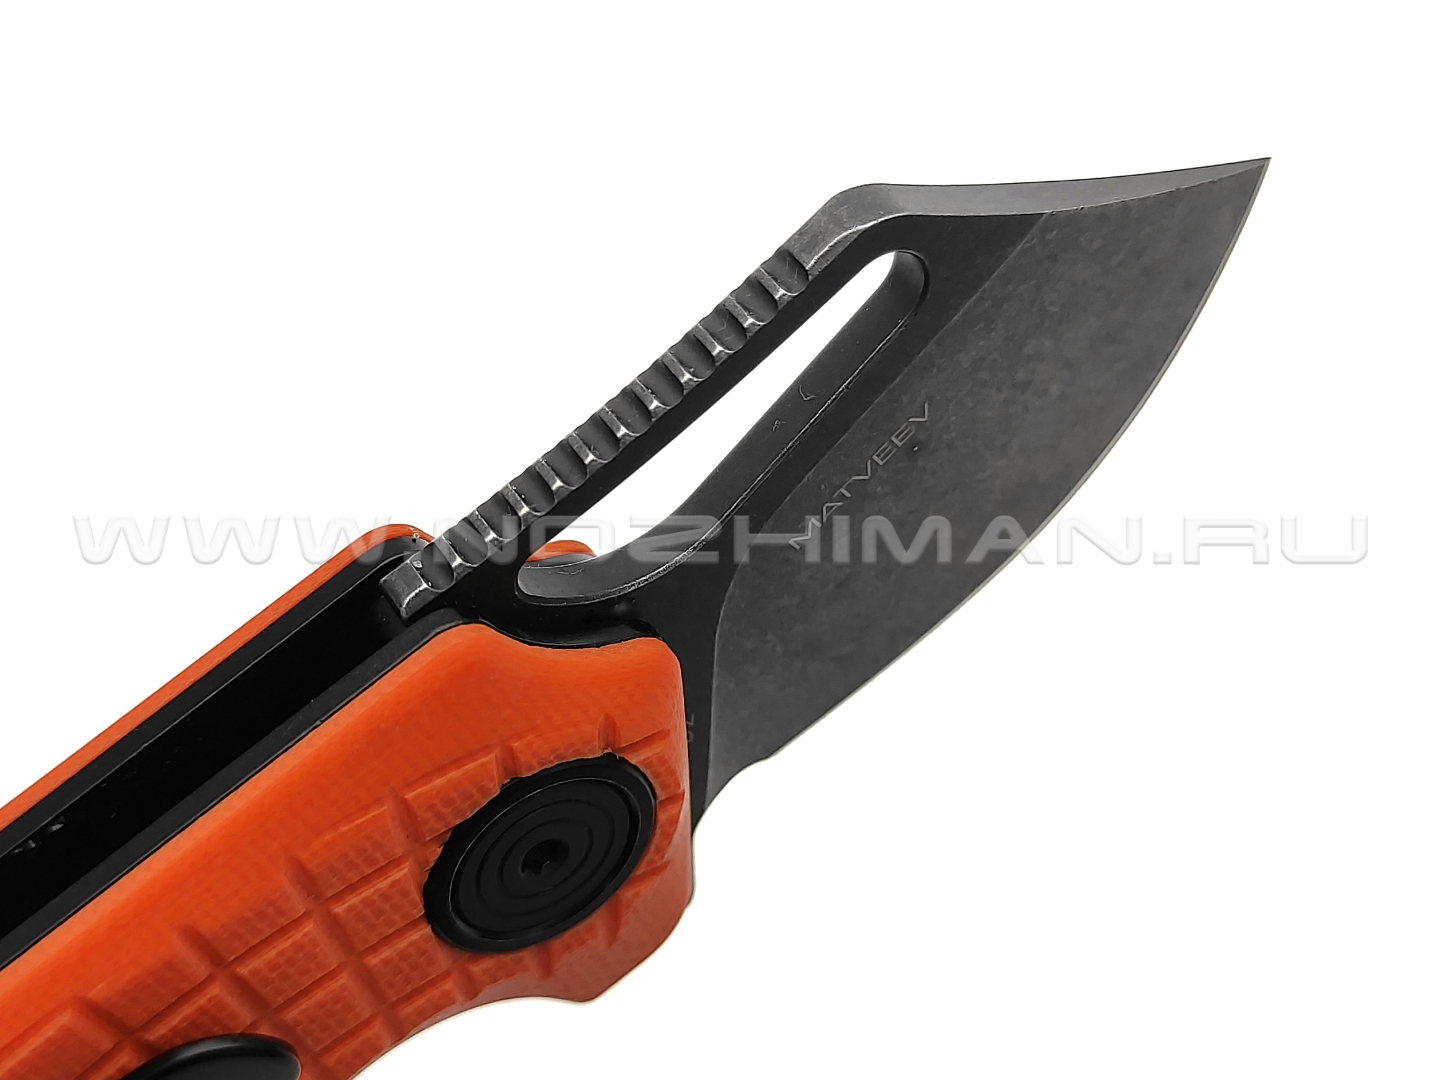 Нож BlackFox Puck BF-761 OR сталь D2 blackwash, рукоять G10 orange